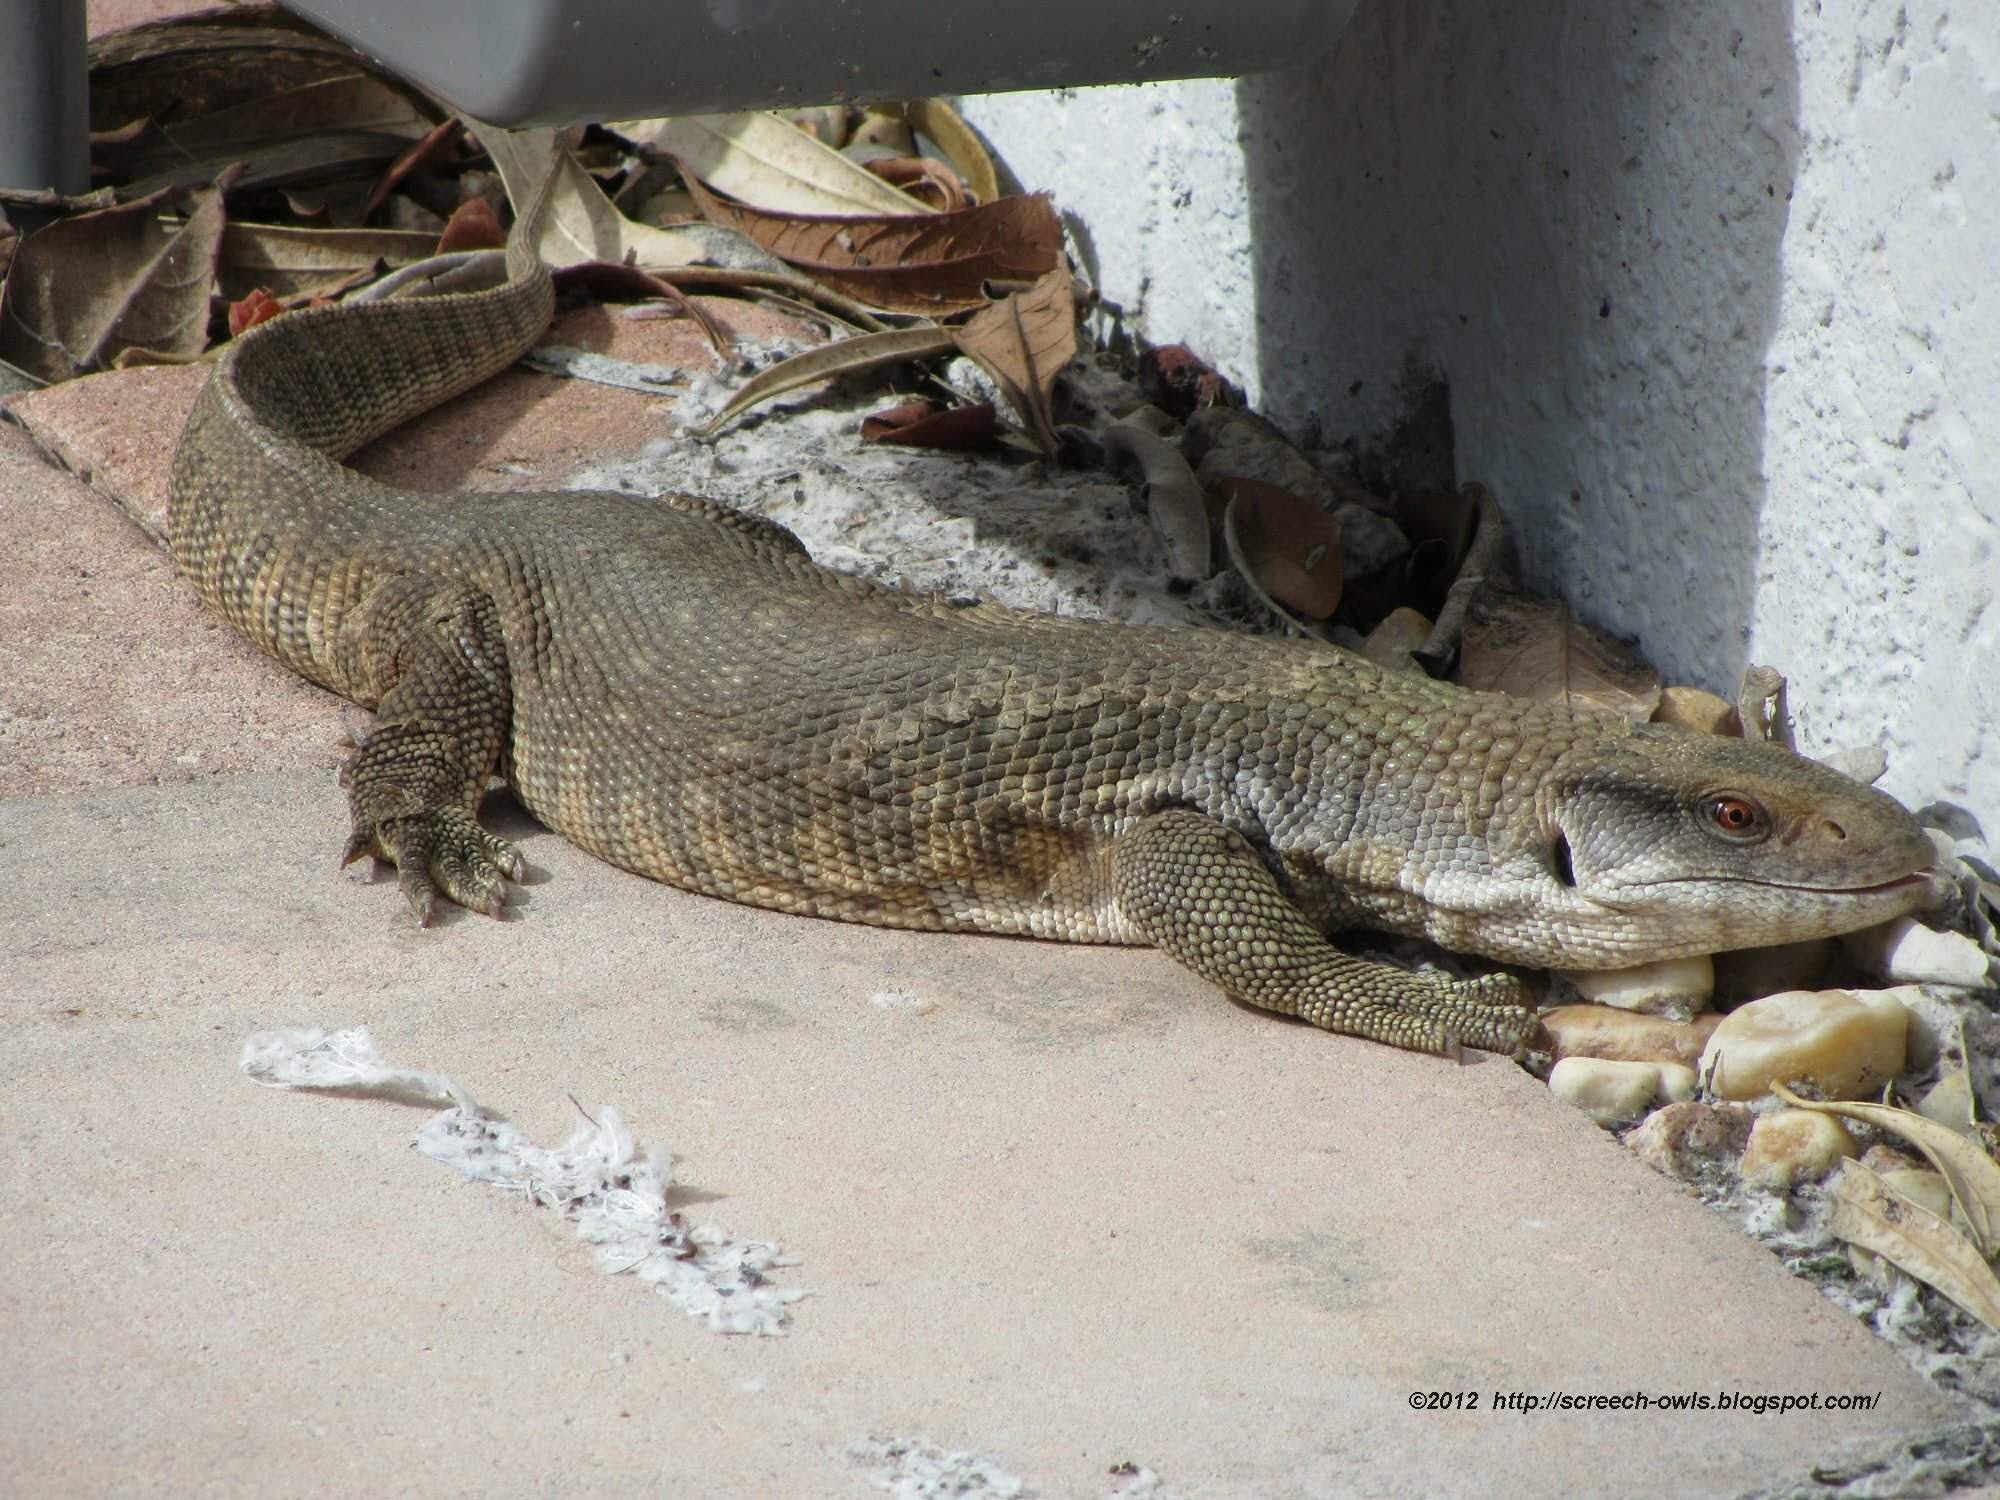 Large Wild Monitor Lizard in Florida Backyard - YouTube